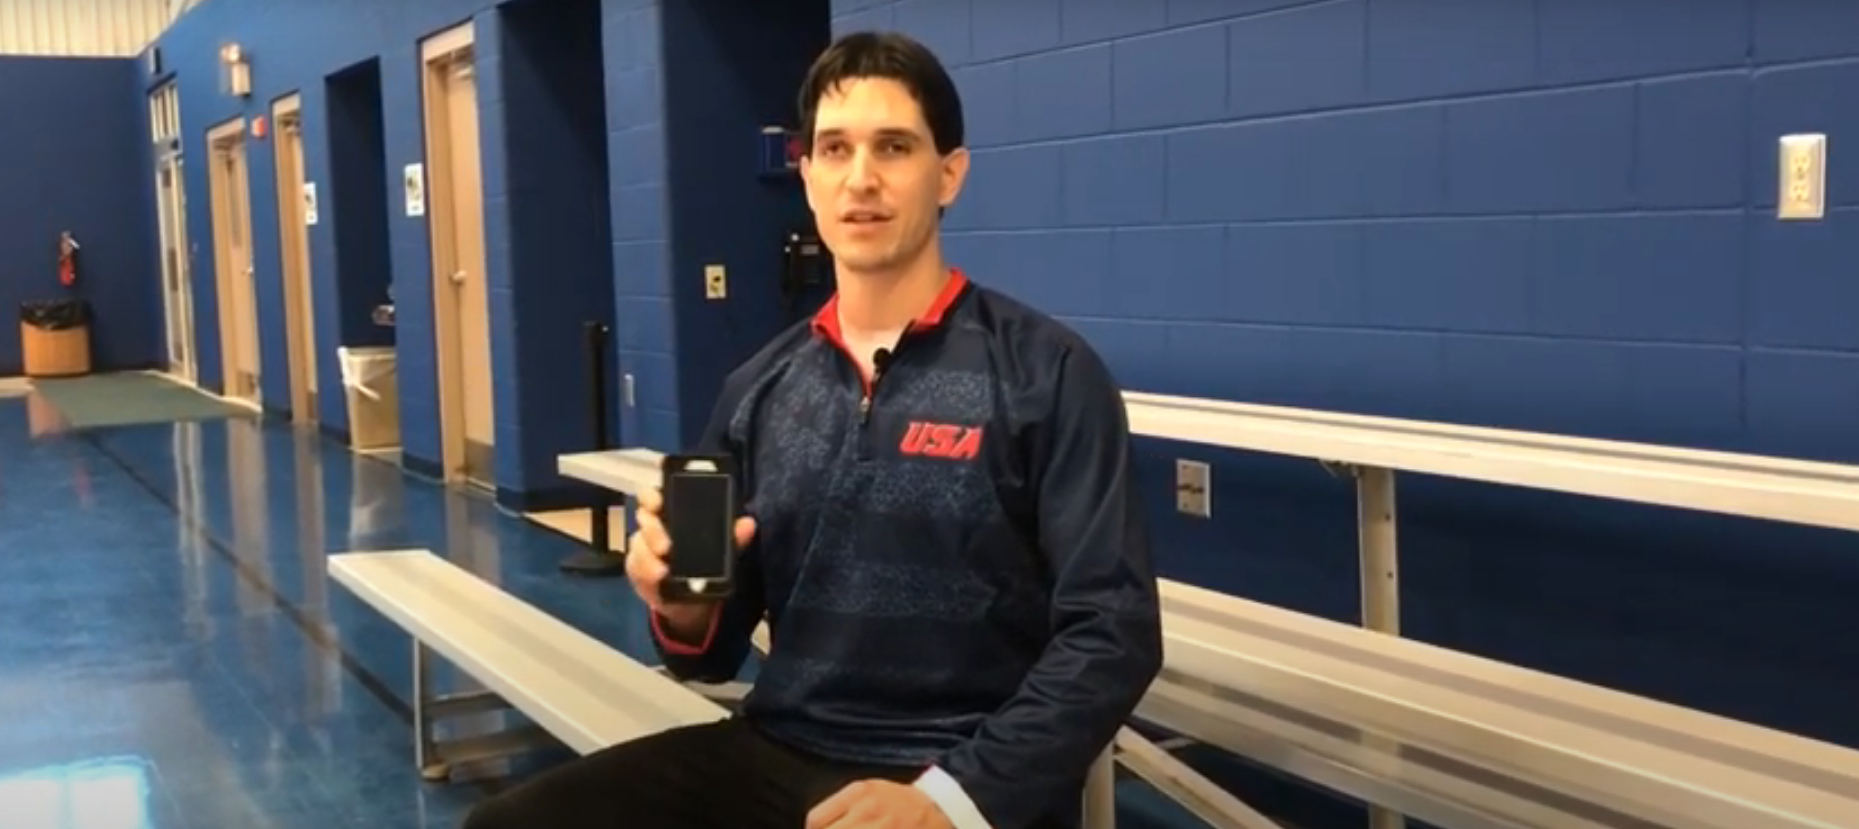 Tyler Merren holding an iphone in a gym.